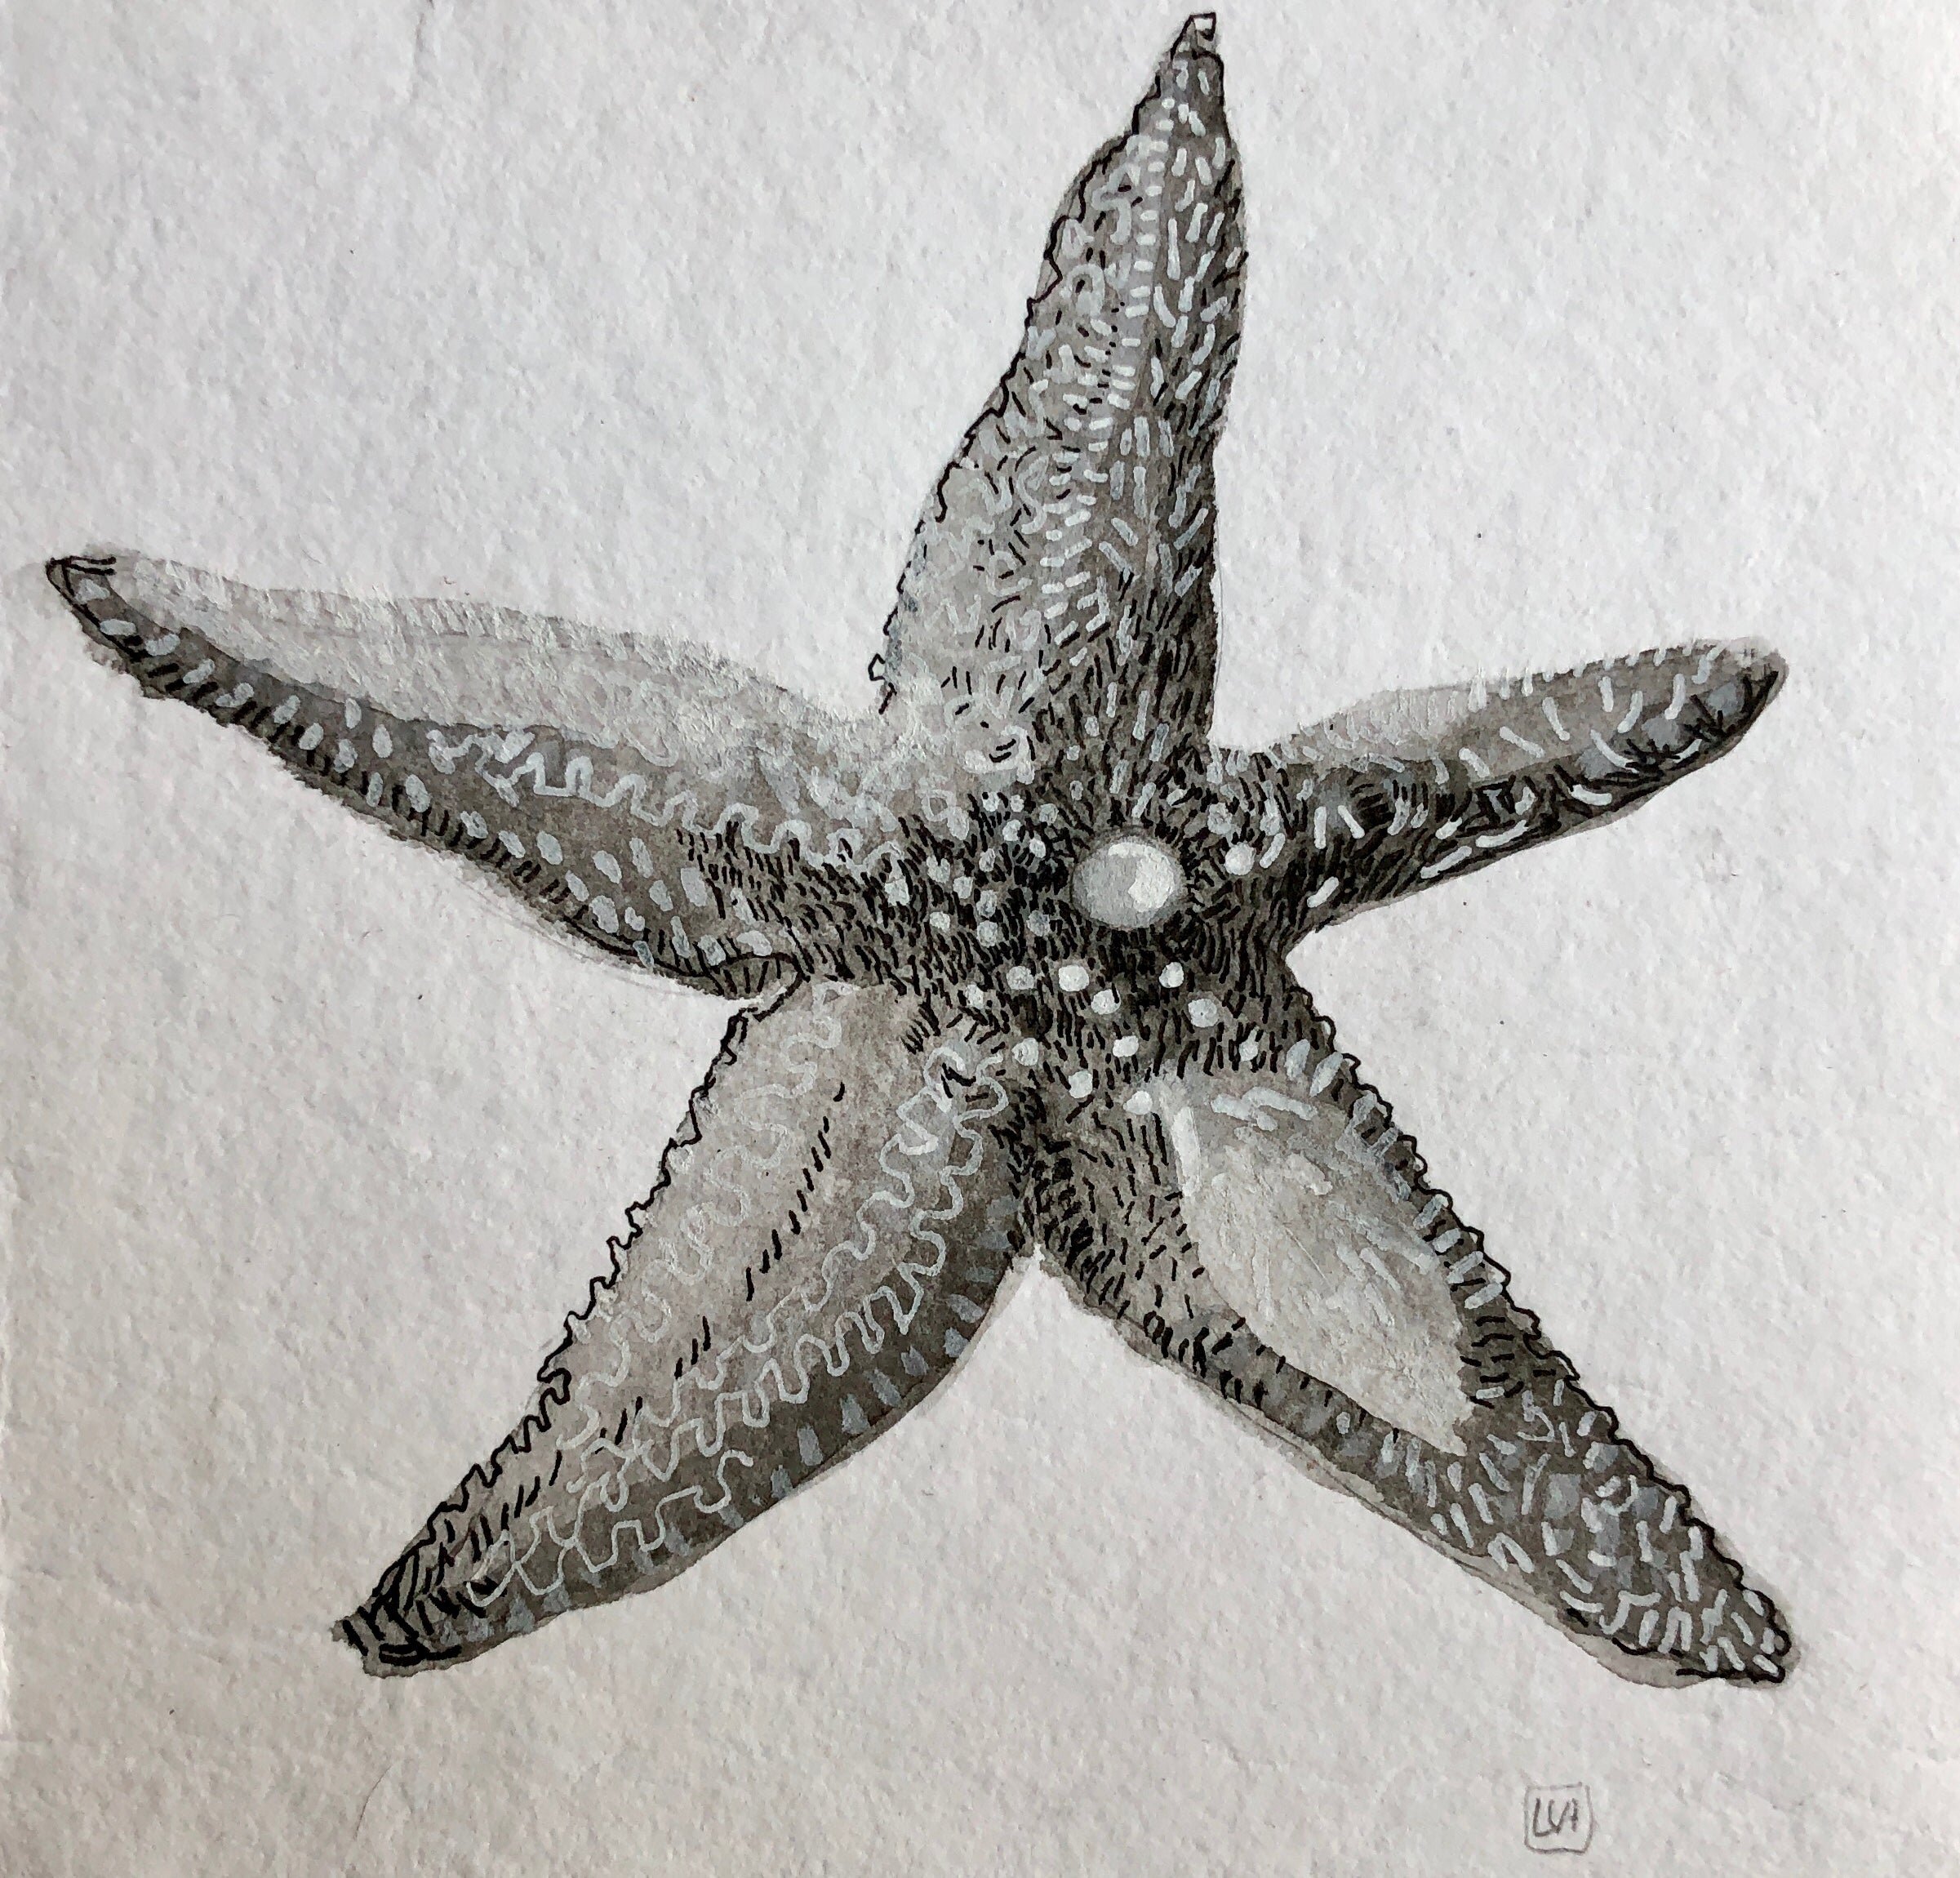 Star fish of different shapes and sizes tattoo idea | TattoosAI